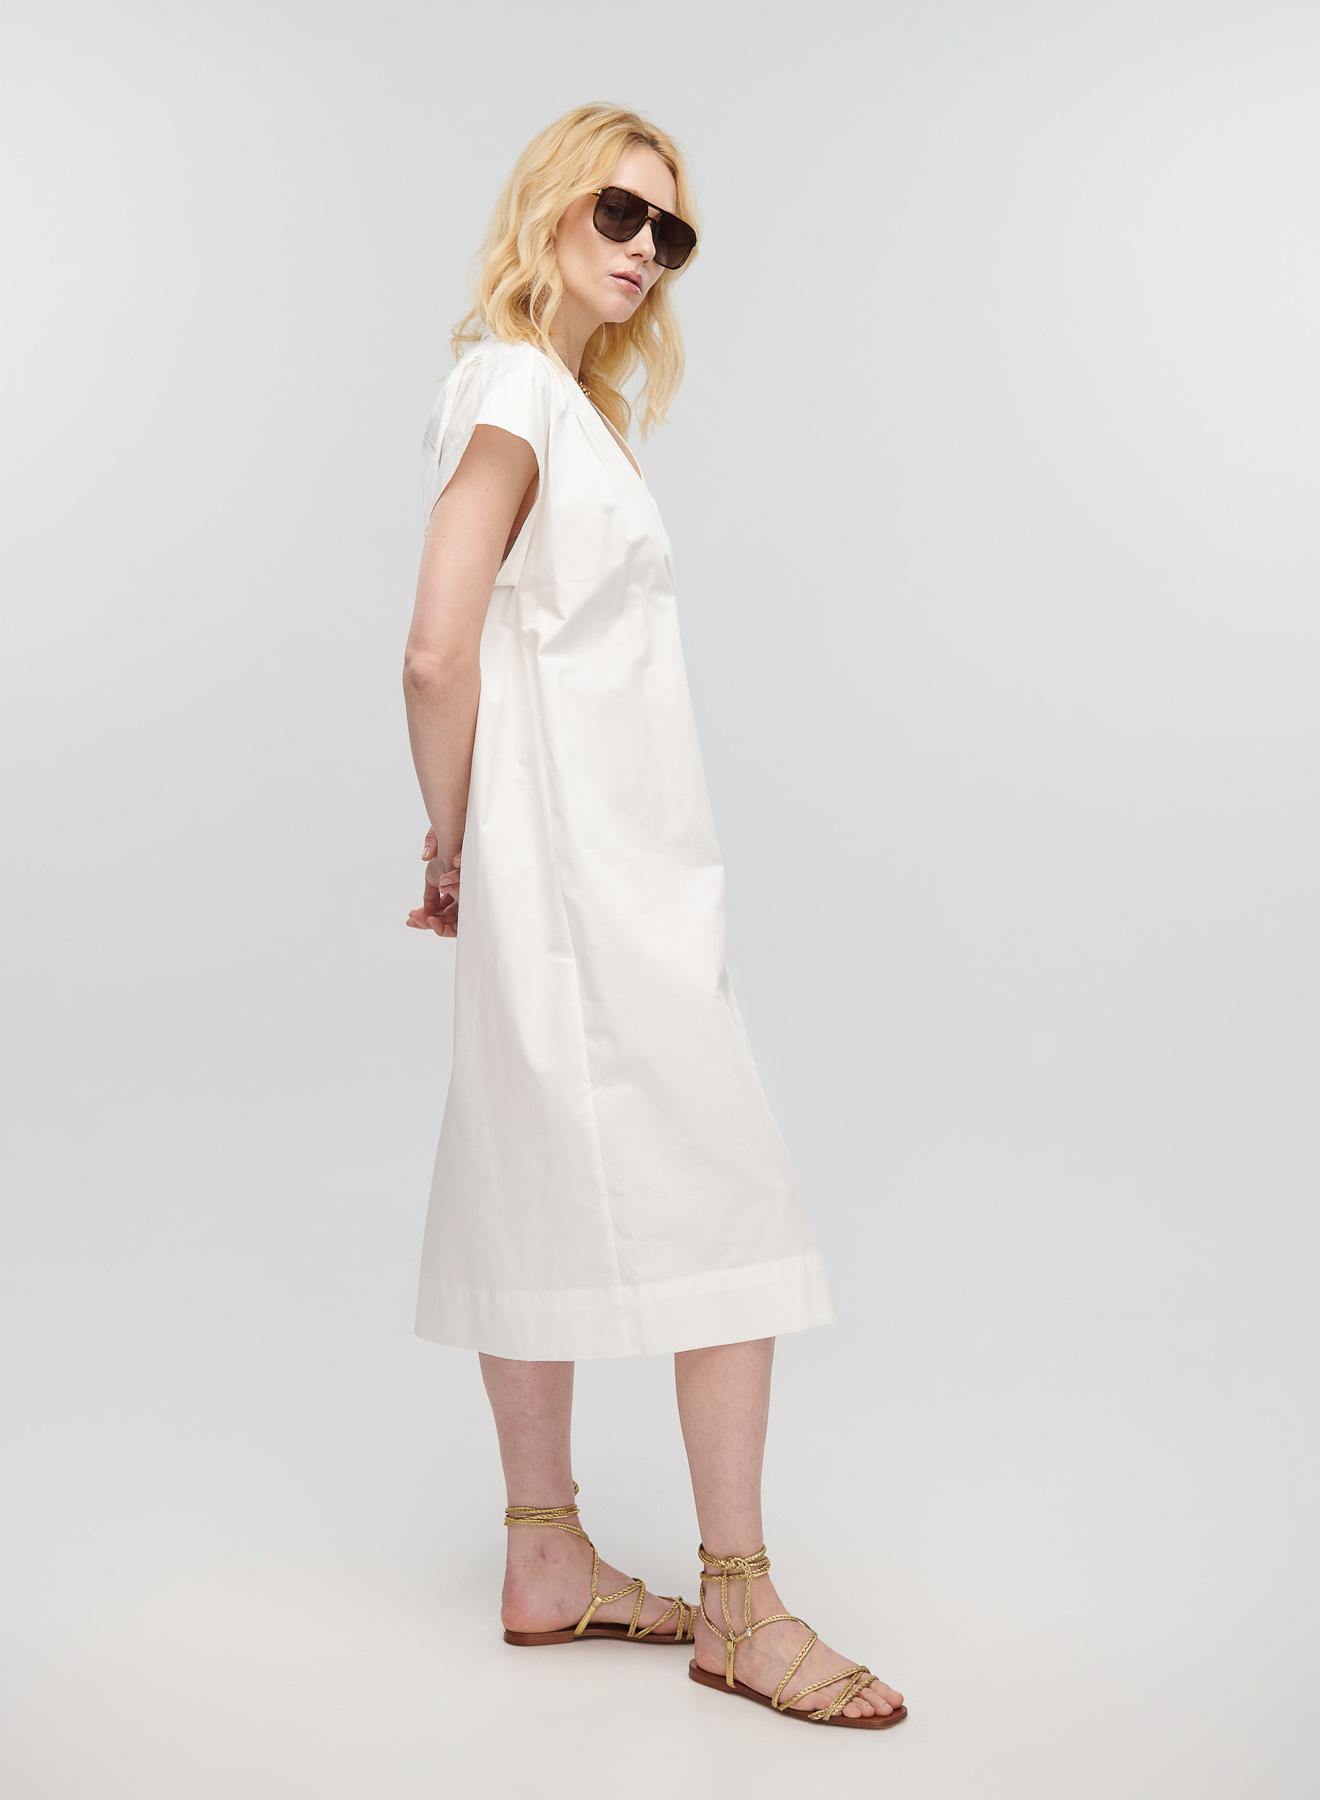 White long sleeveless Dress with V neckline, belt and front slit Milla - 2